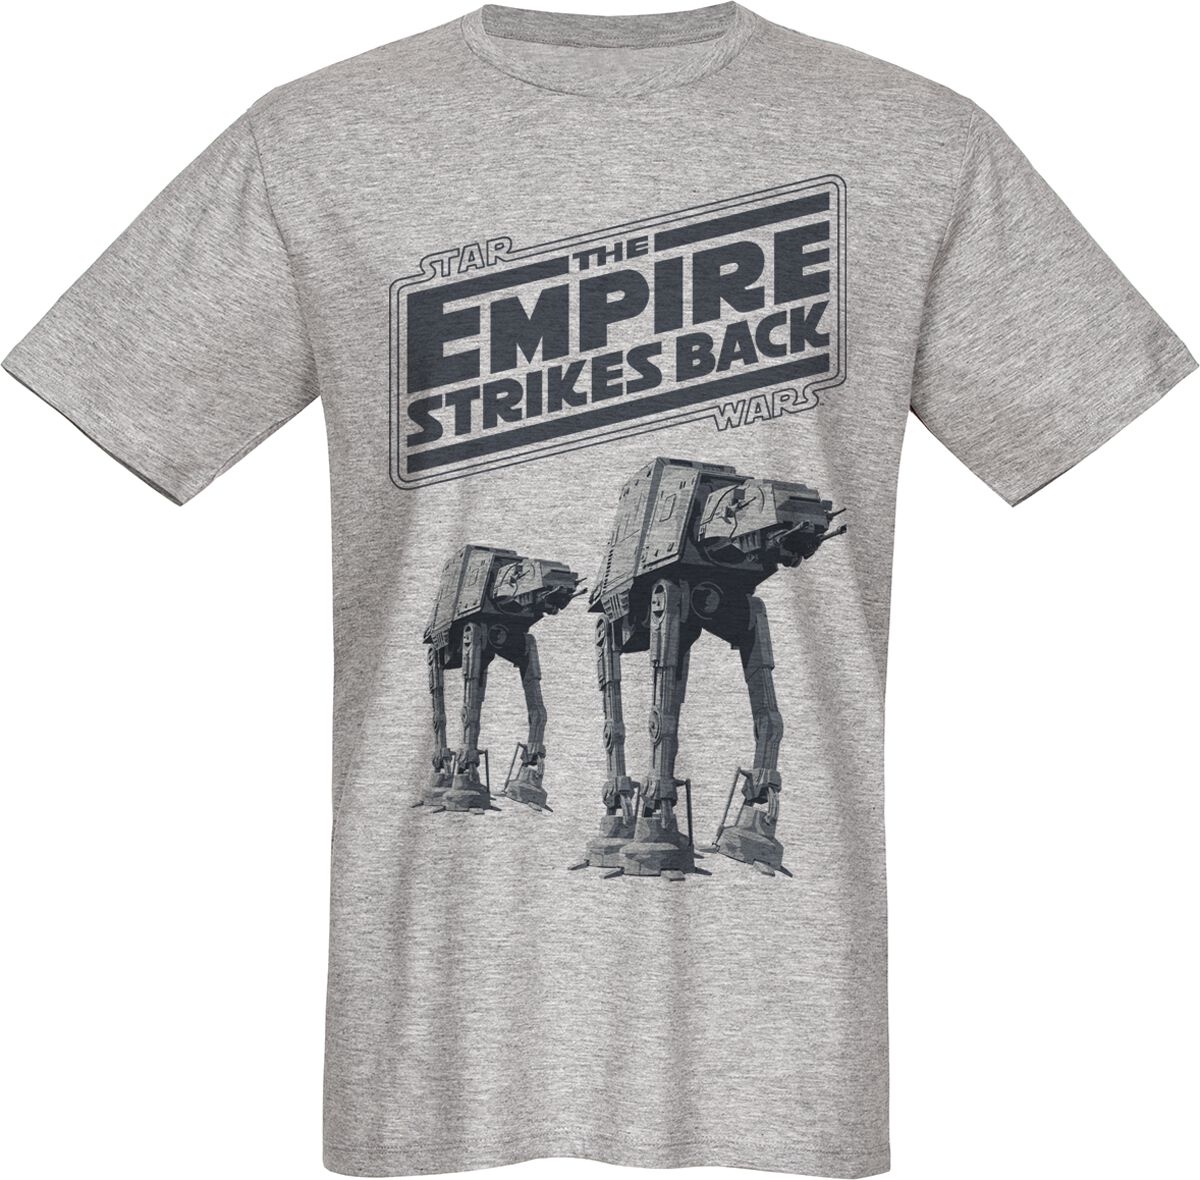 Star Wars The Empire Strikes Back T-Shirt grau in 4XL